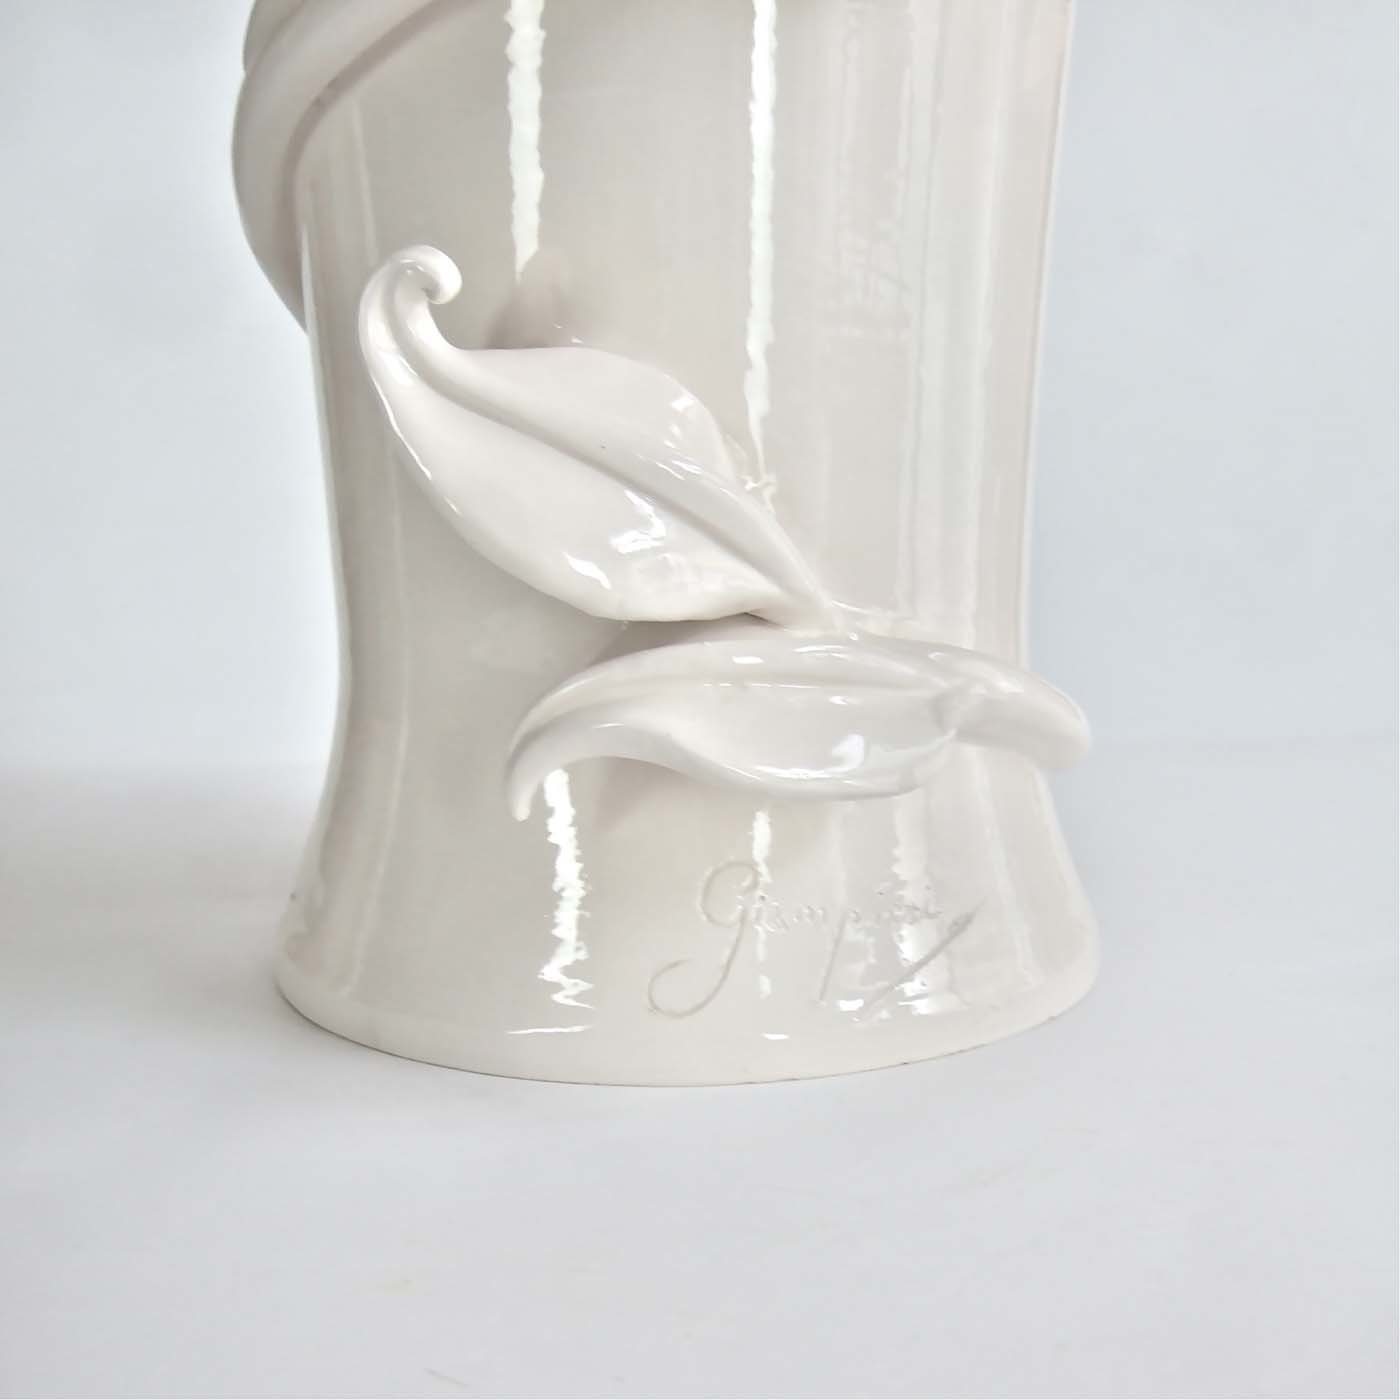 Embrace Vase The White Symphony Collection - Alternative view 1